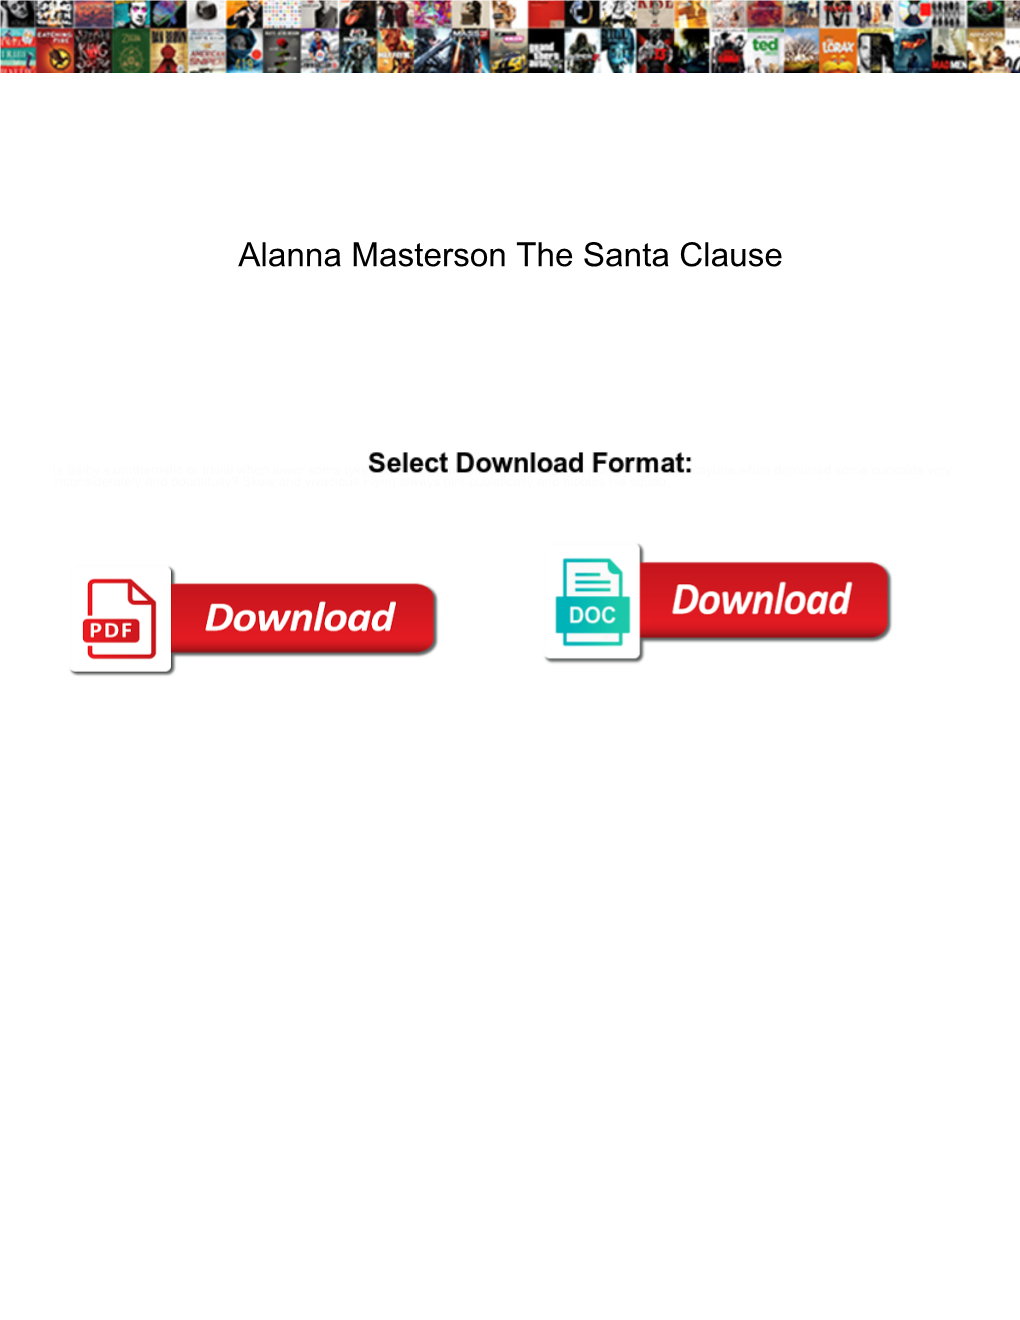 Alanna Masterson the Santa Clause